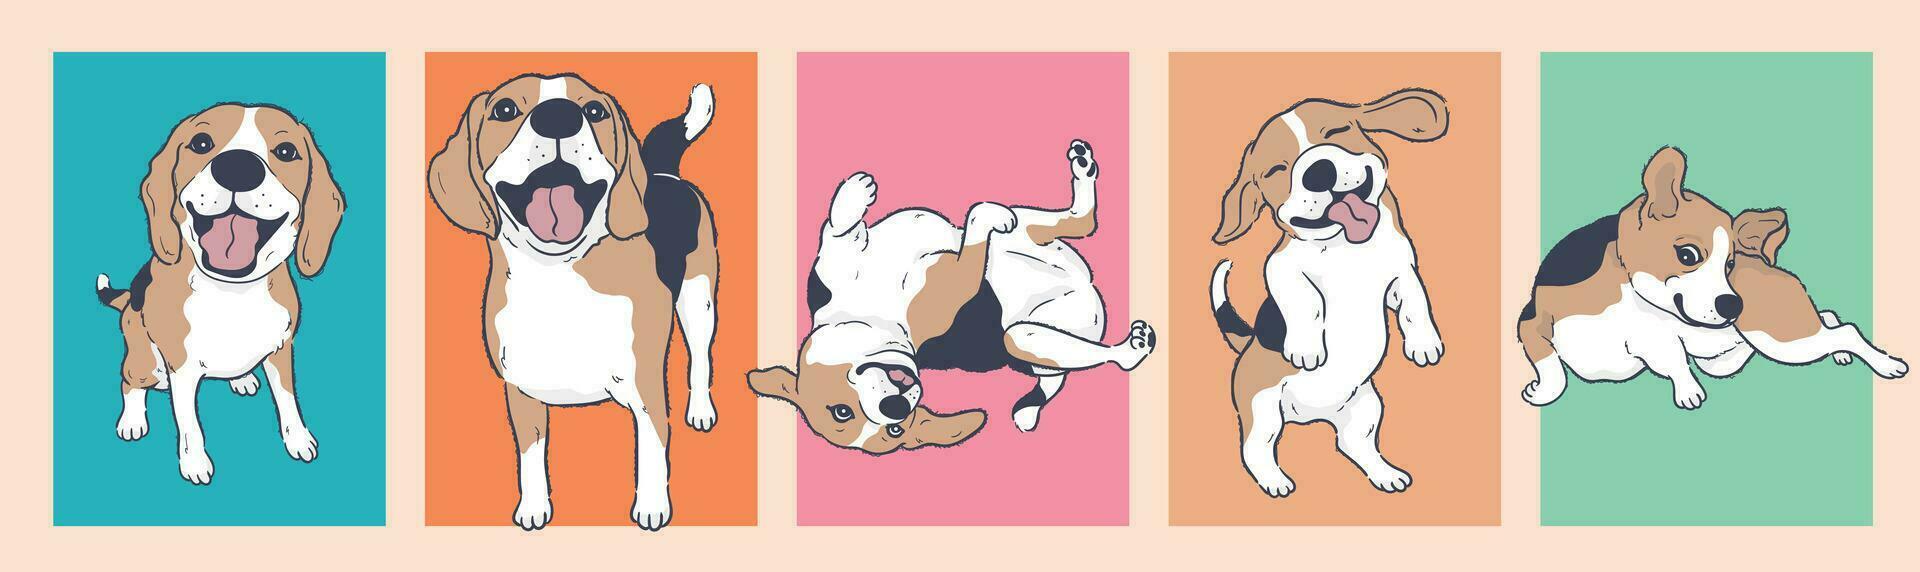 Cute Cartoon Beagle Dog set, Cartoon Dog Character Design with Flat Colors in Various Poses vector